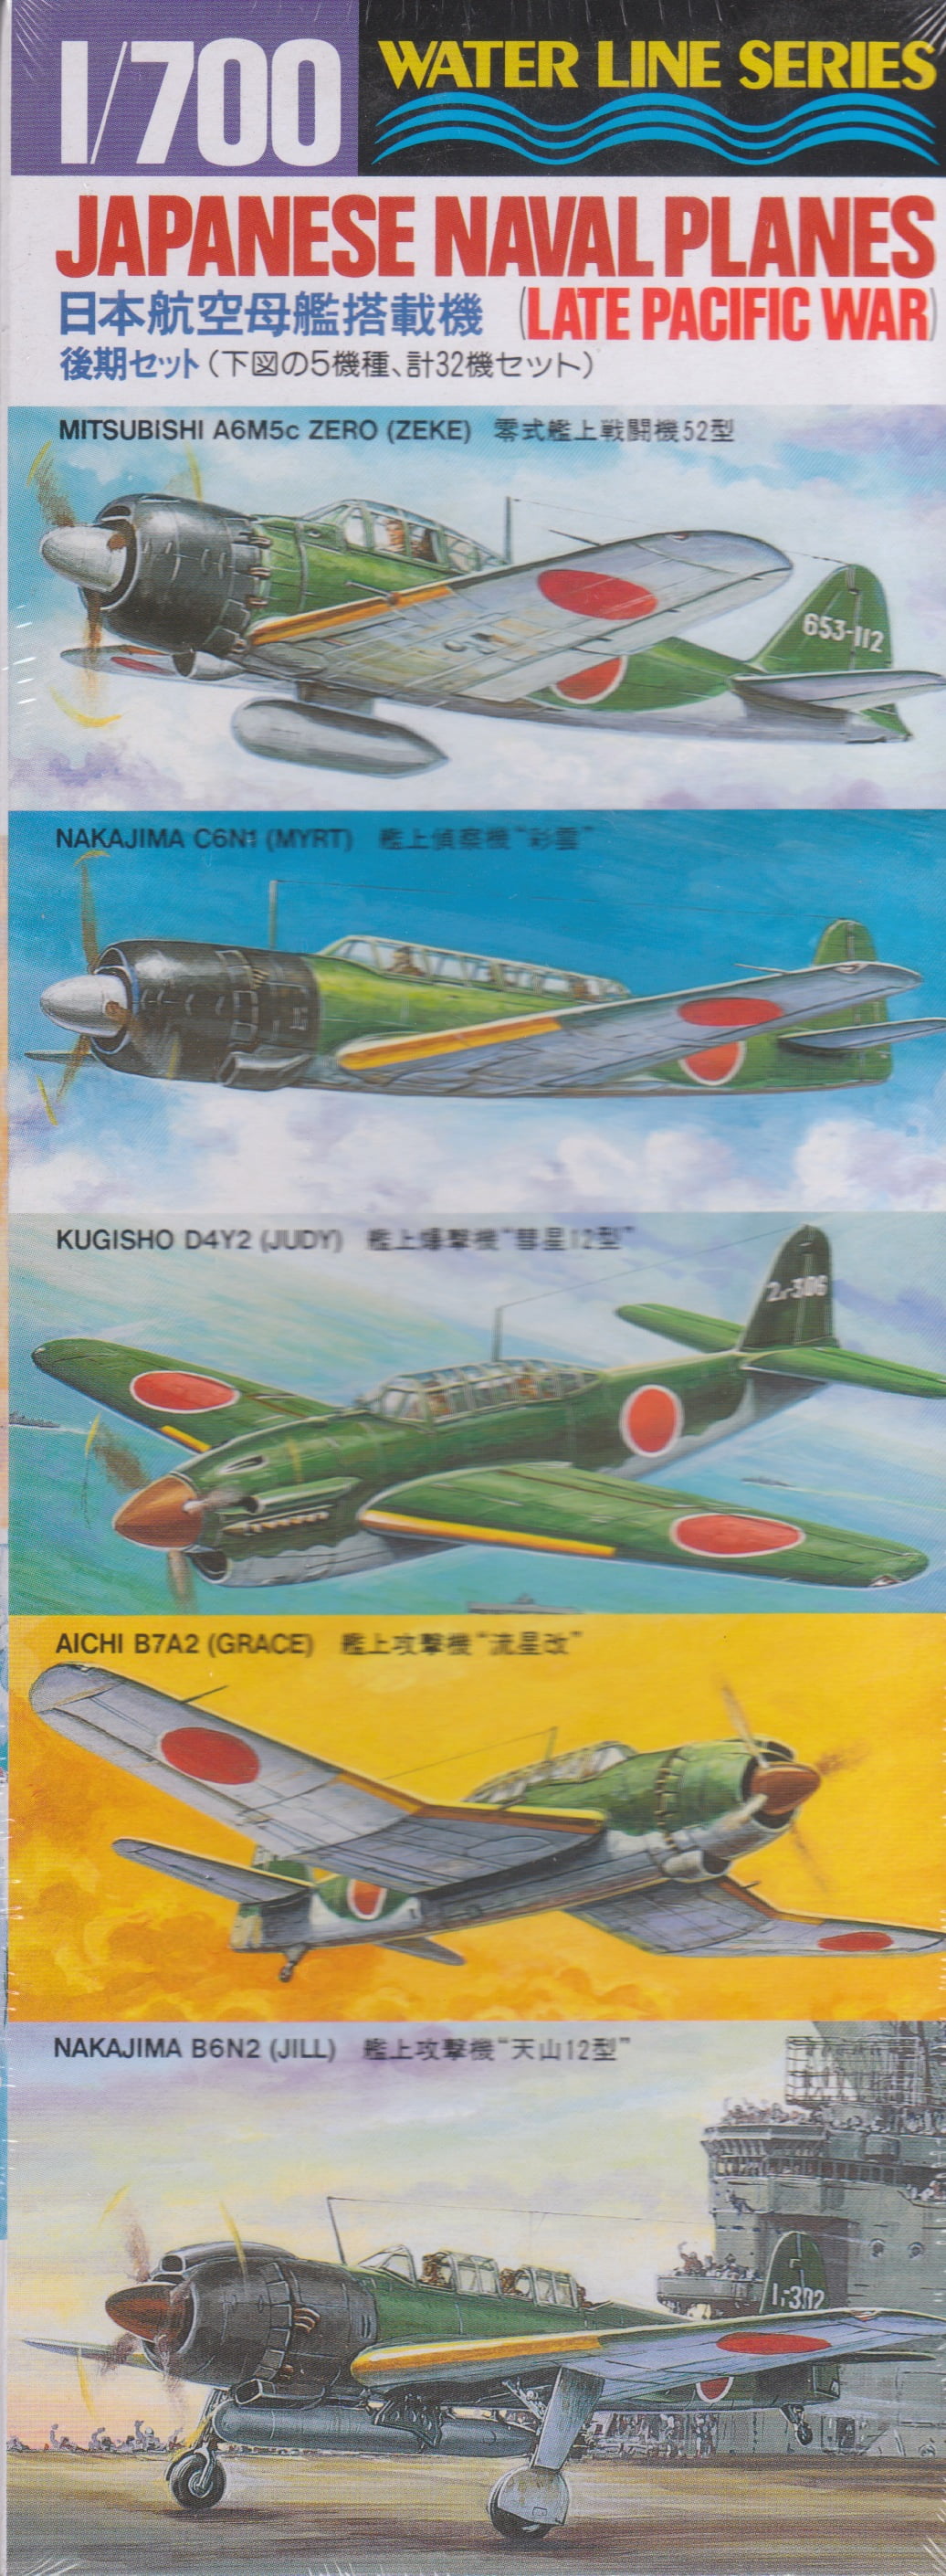 Hasegawa 1/700 Japanese Navy Carrier-Based Aircraft Set Biplane Model Kit NEW 